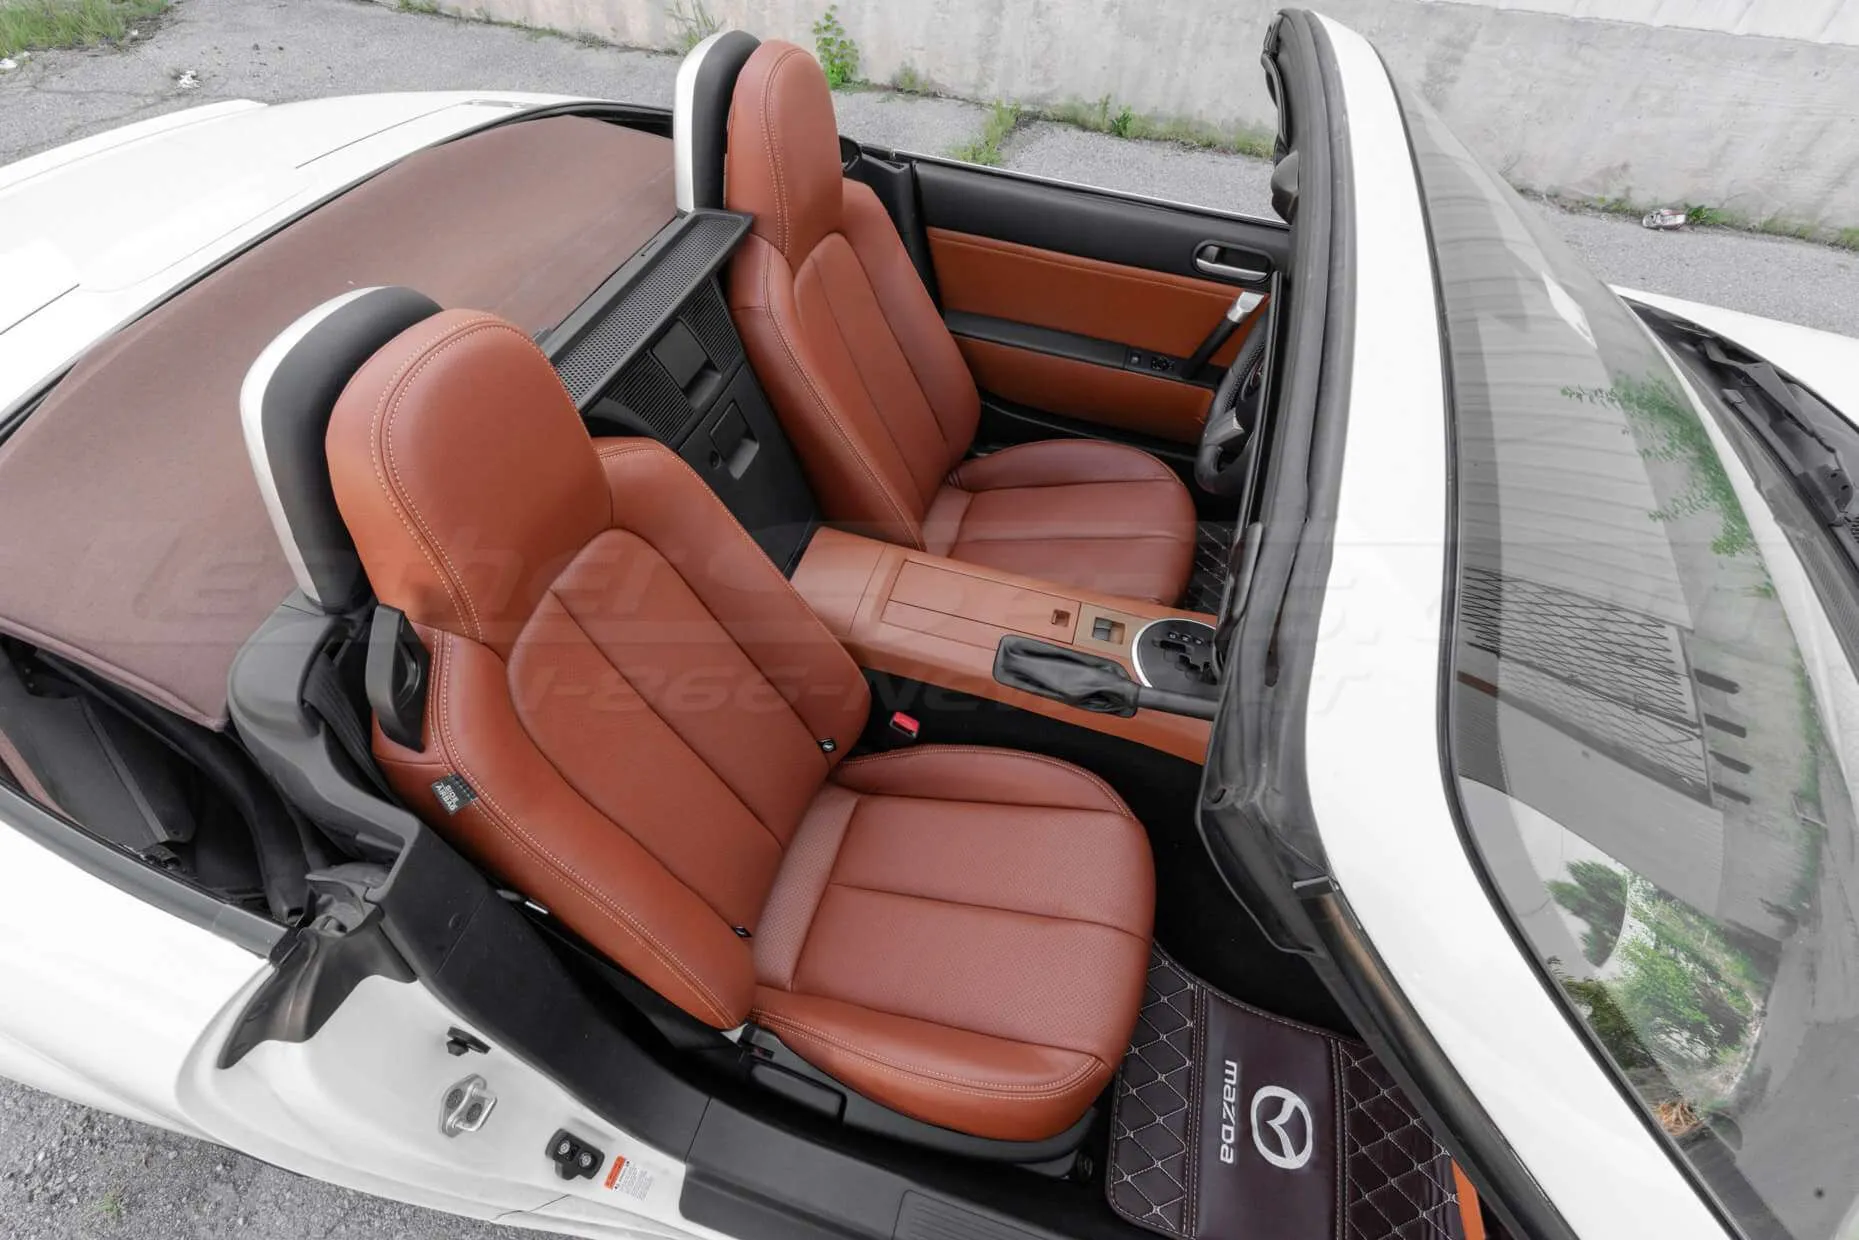 Passenger view top-down of Mazda Miata interior